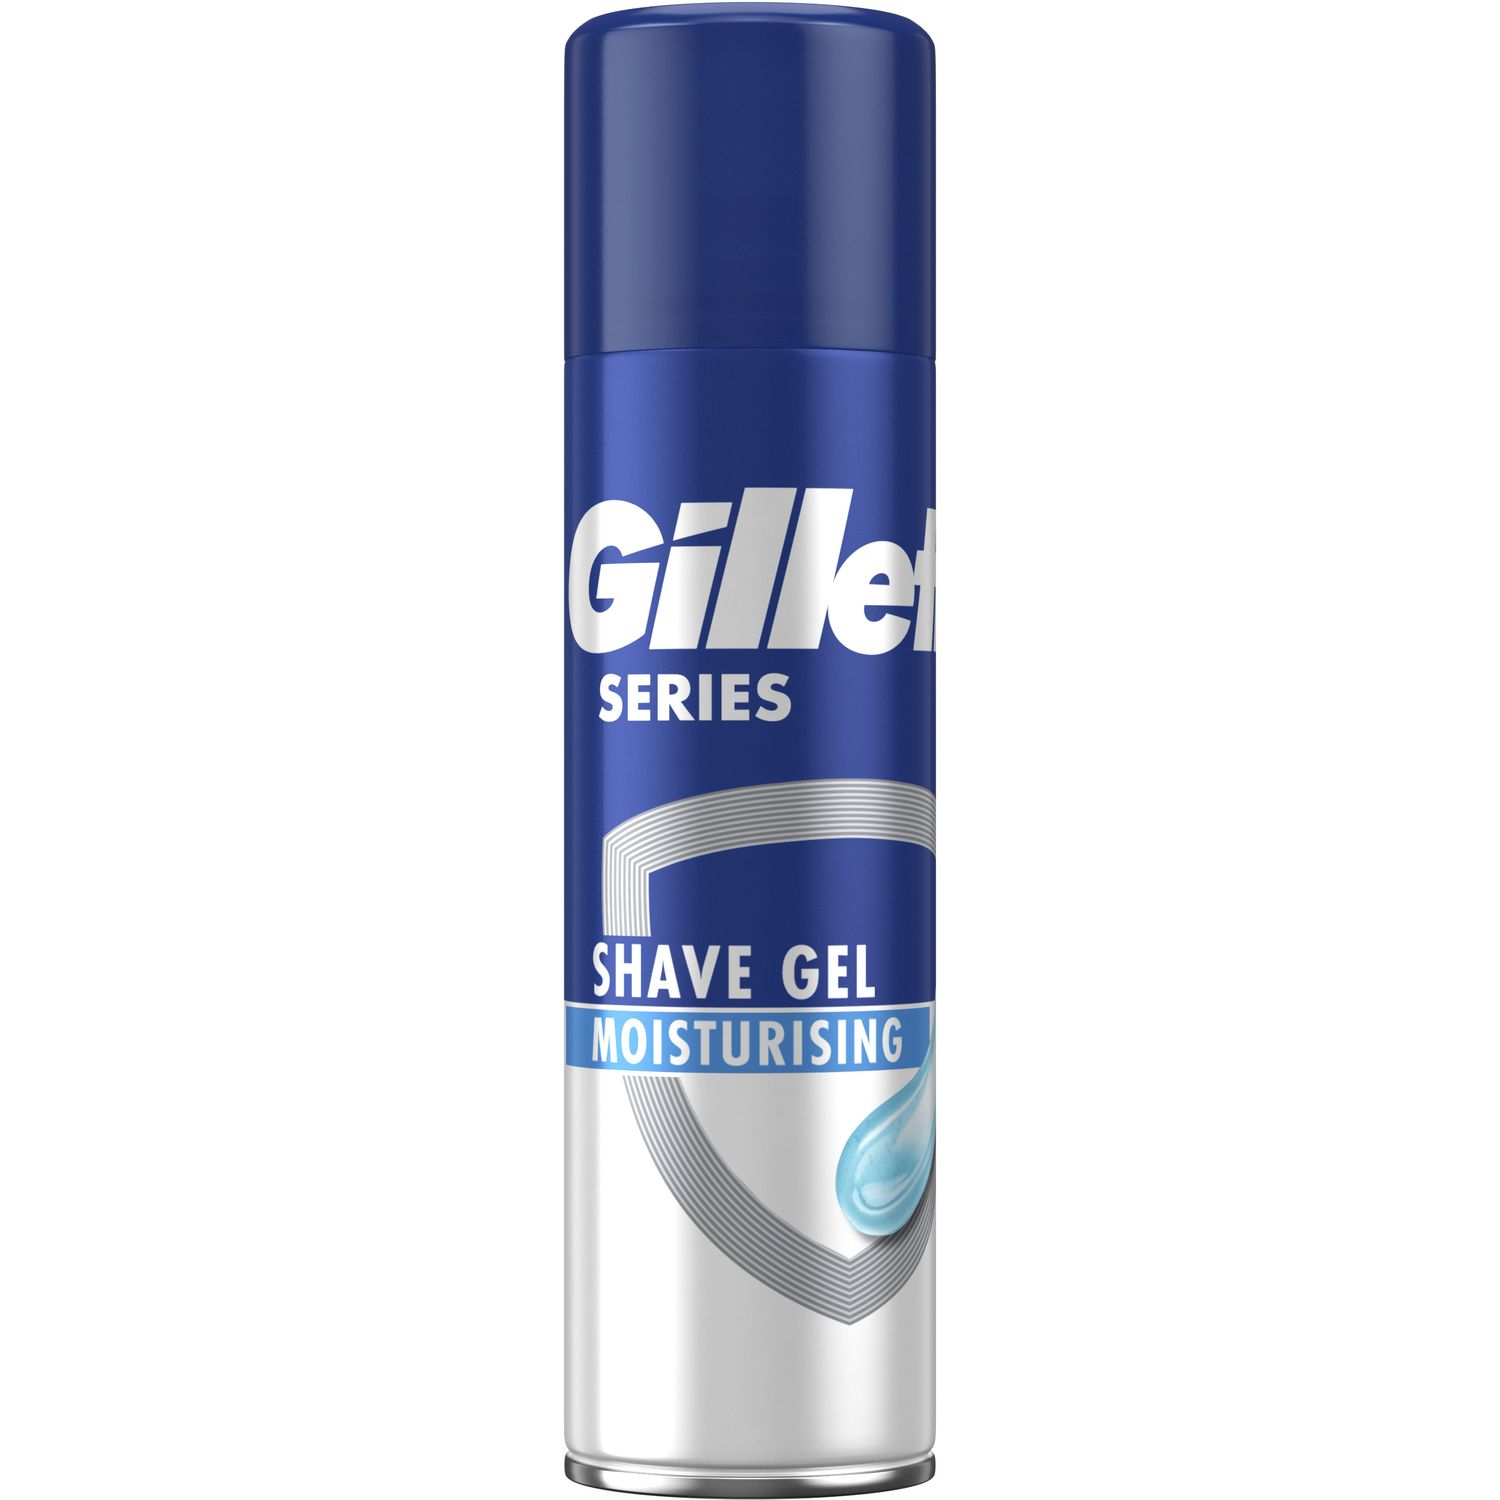 Увлажняющий гель для бритья Gillette Series Moisturizing, 200 мл - фото 1